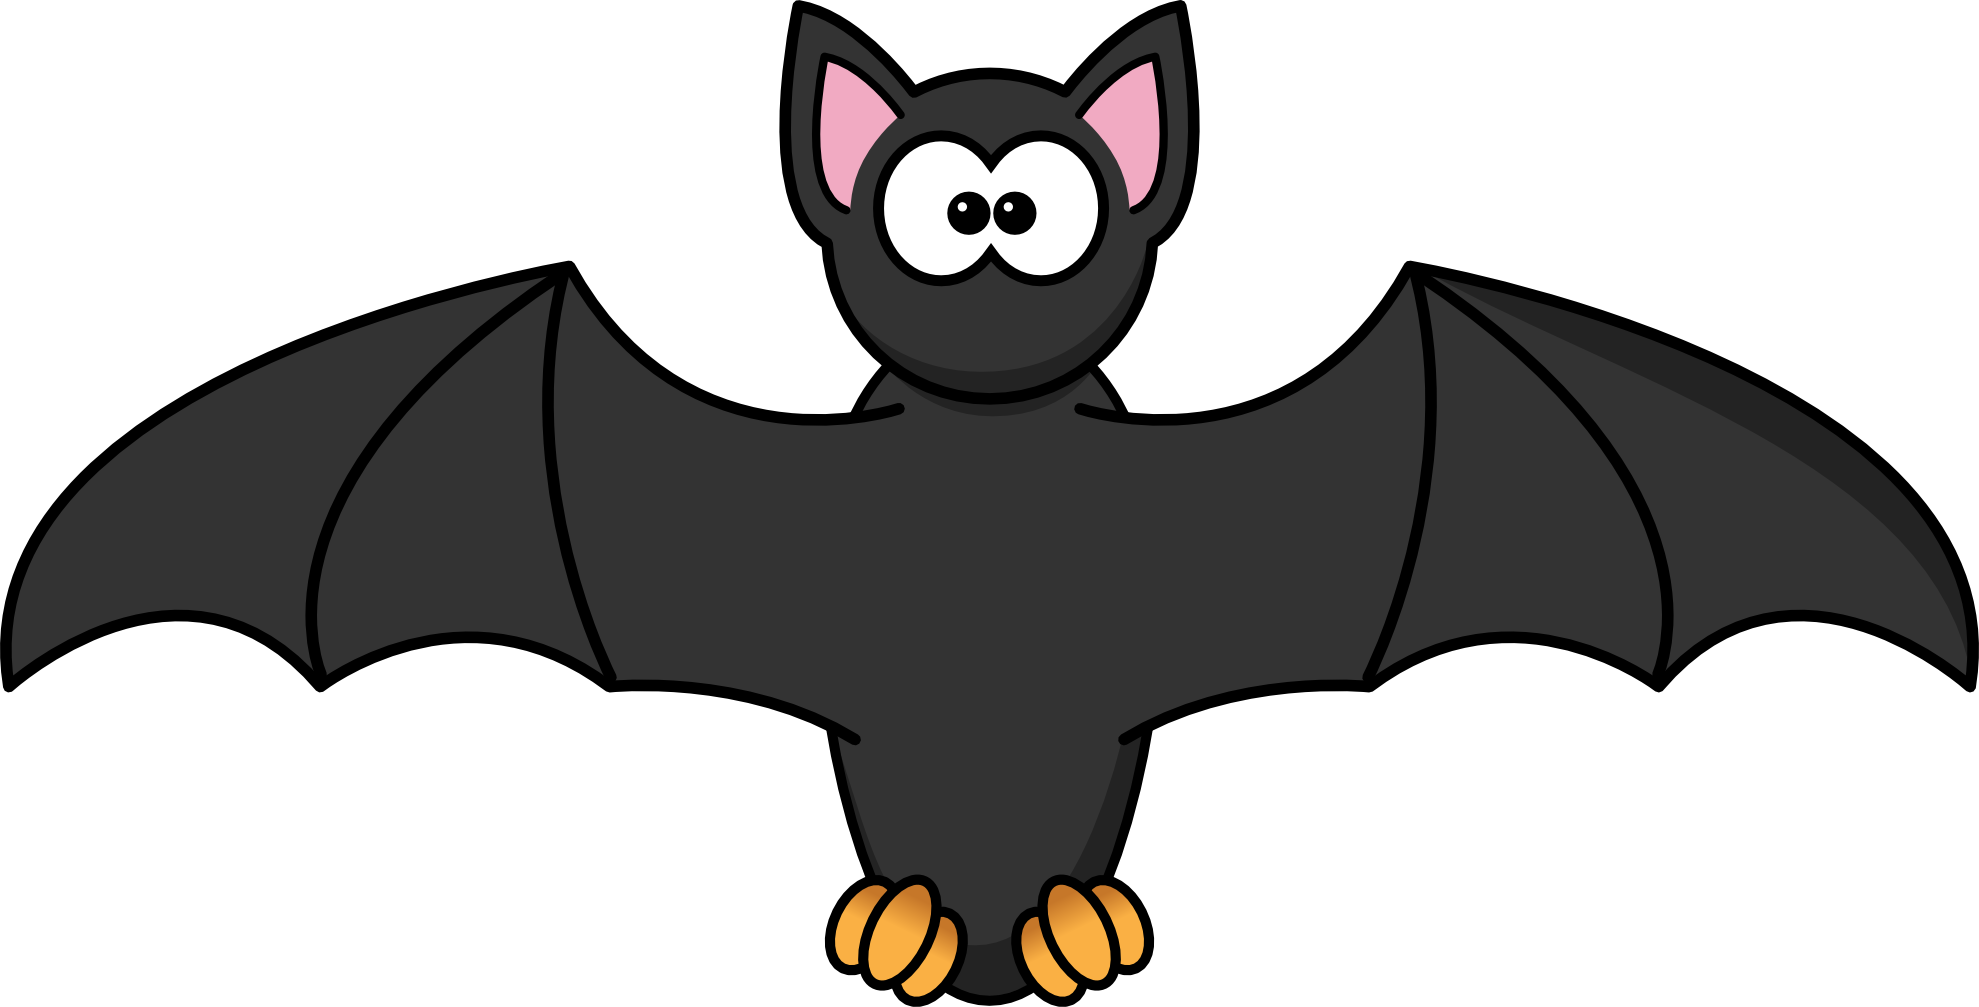 Pic Of Cartoon Bat - ClipArt Best